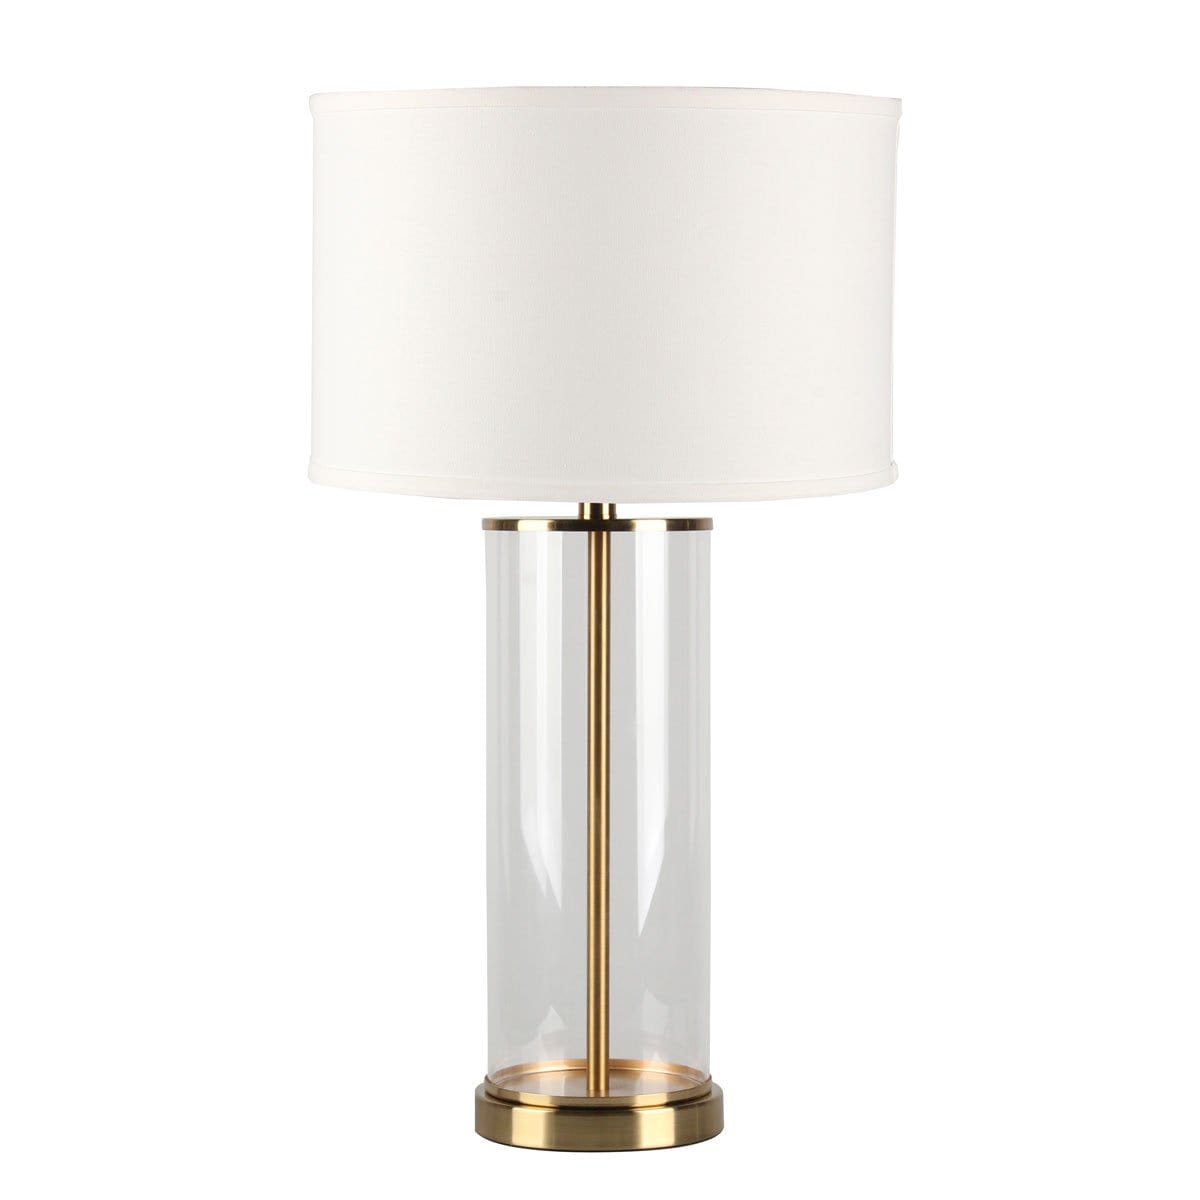 CAFE LIGHTING & LIVING Table Lamp Left Bank Table Lamp - Brass w White Shade B12268